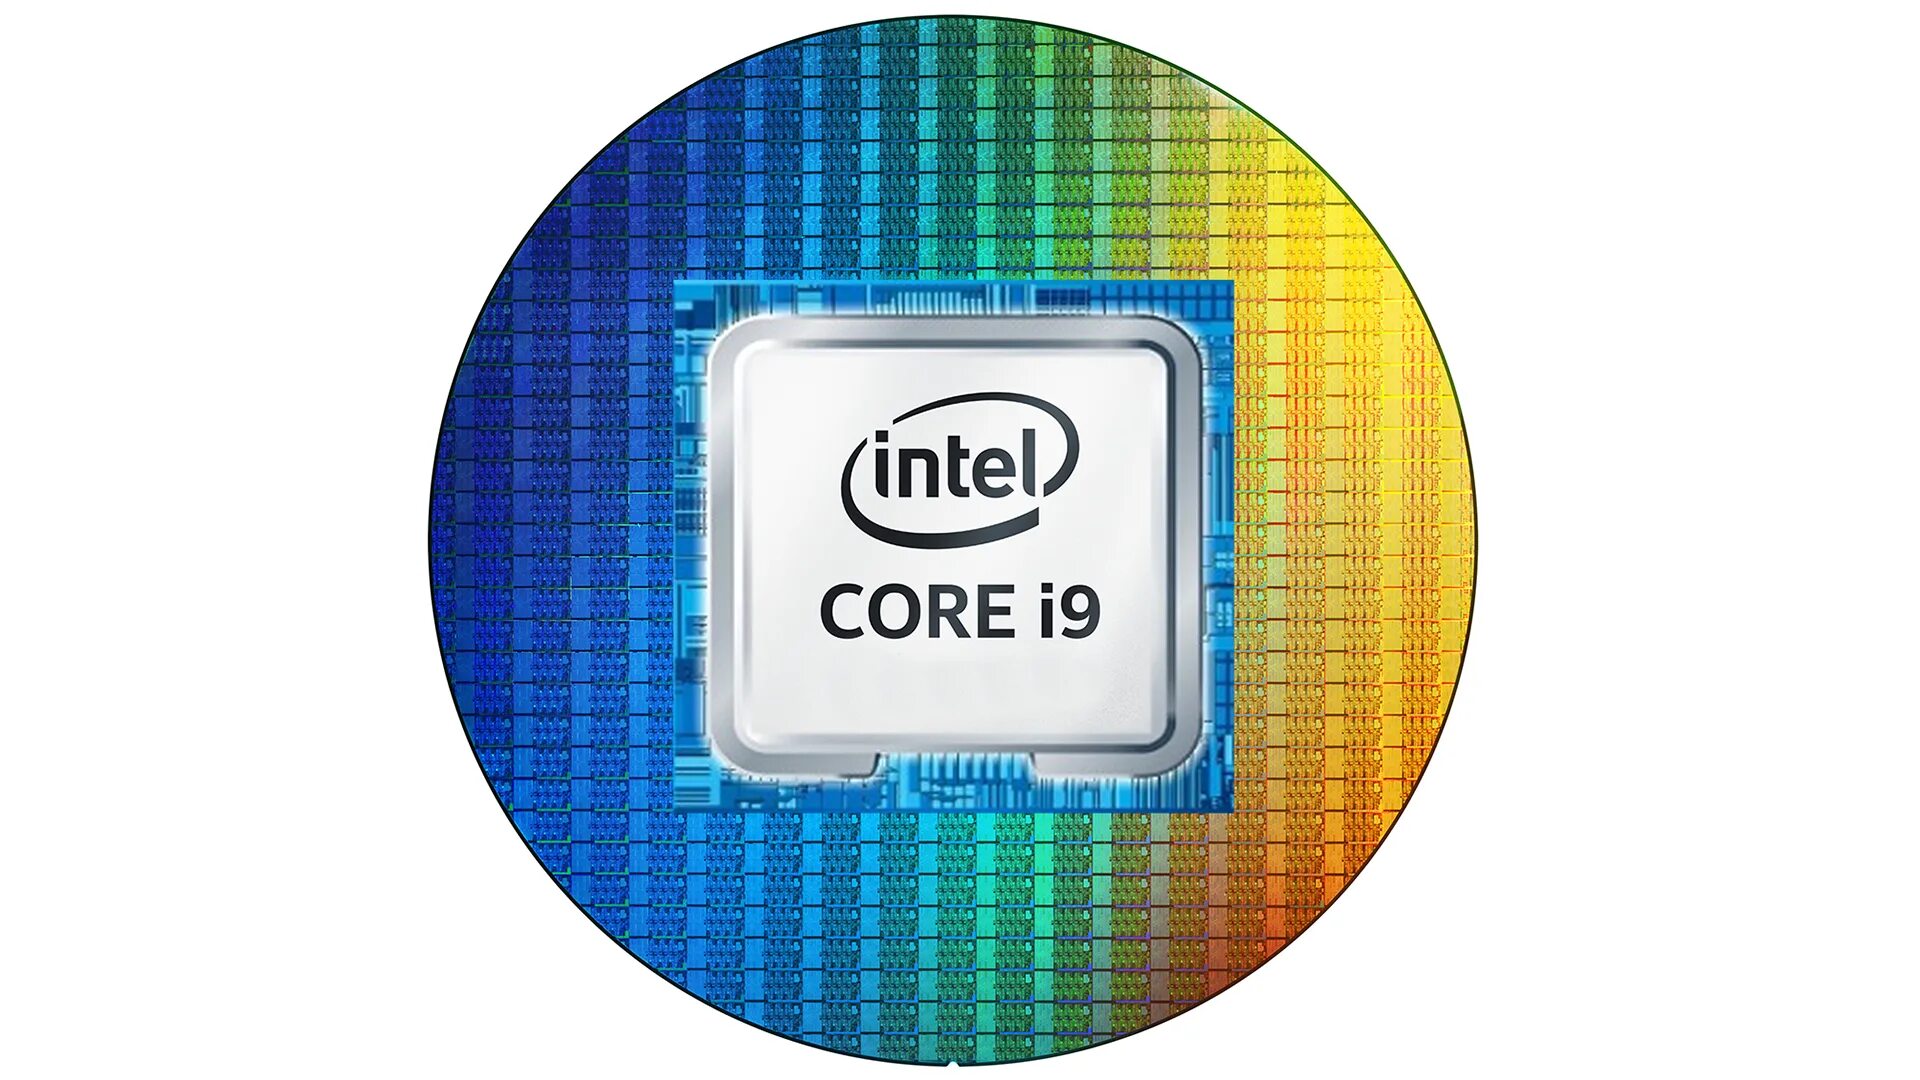 Процессор Intel Core i9. Intel Core i9-9900k. Процессор Интел кор ай 9. Процессор Intel i9 9900k.